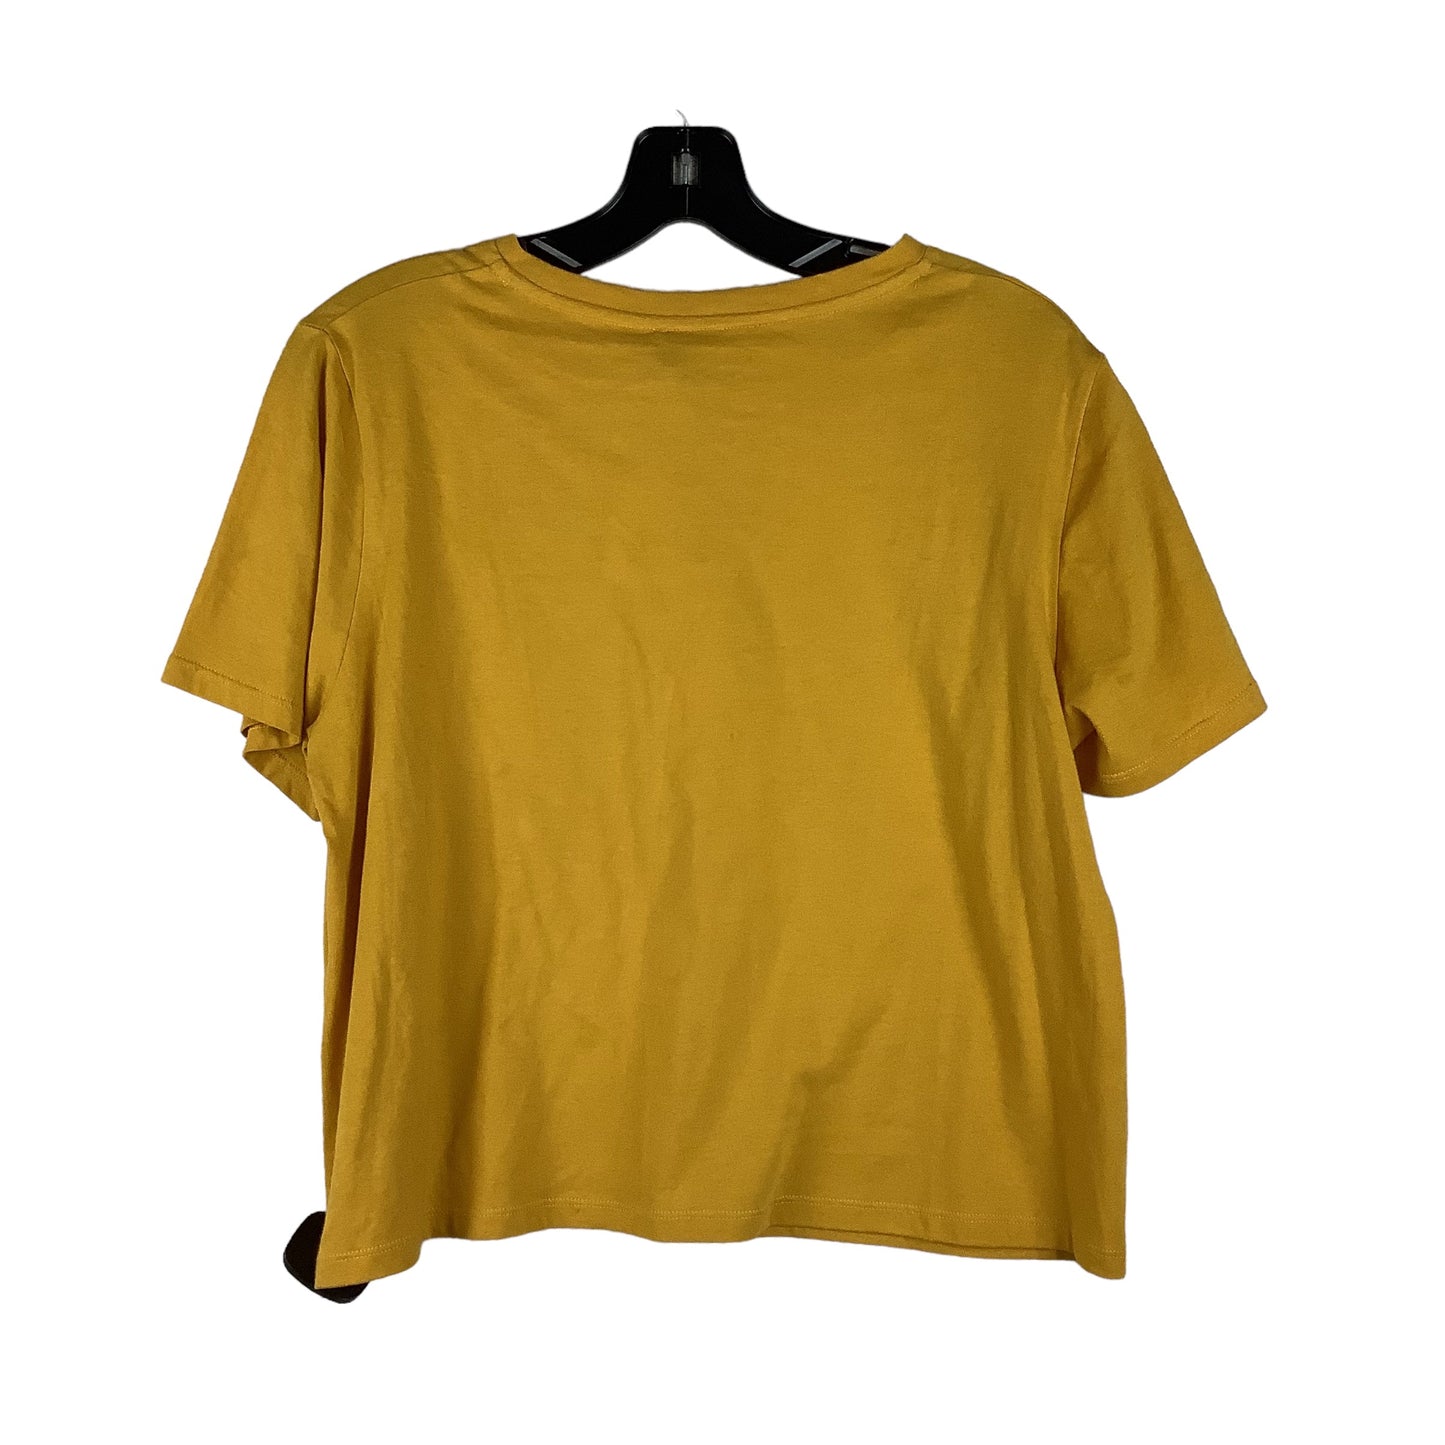 Yellow Top Short Sleeve Minkpink, Size S